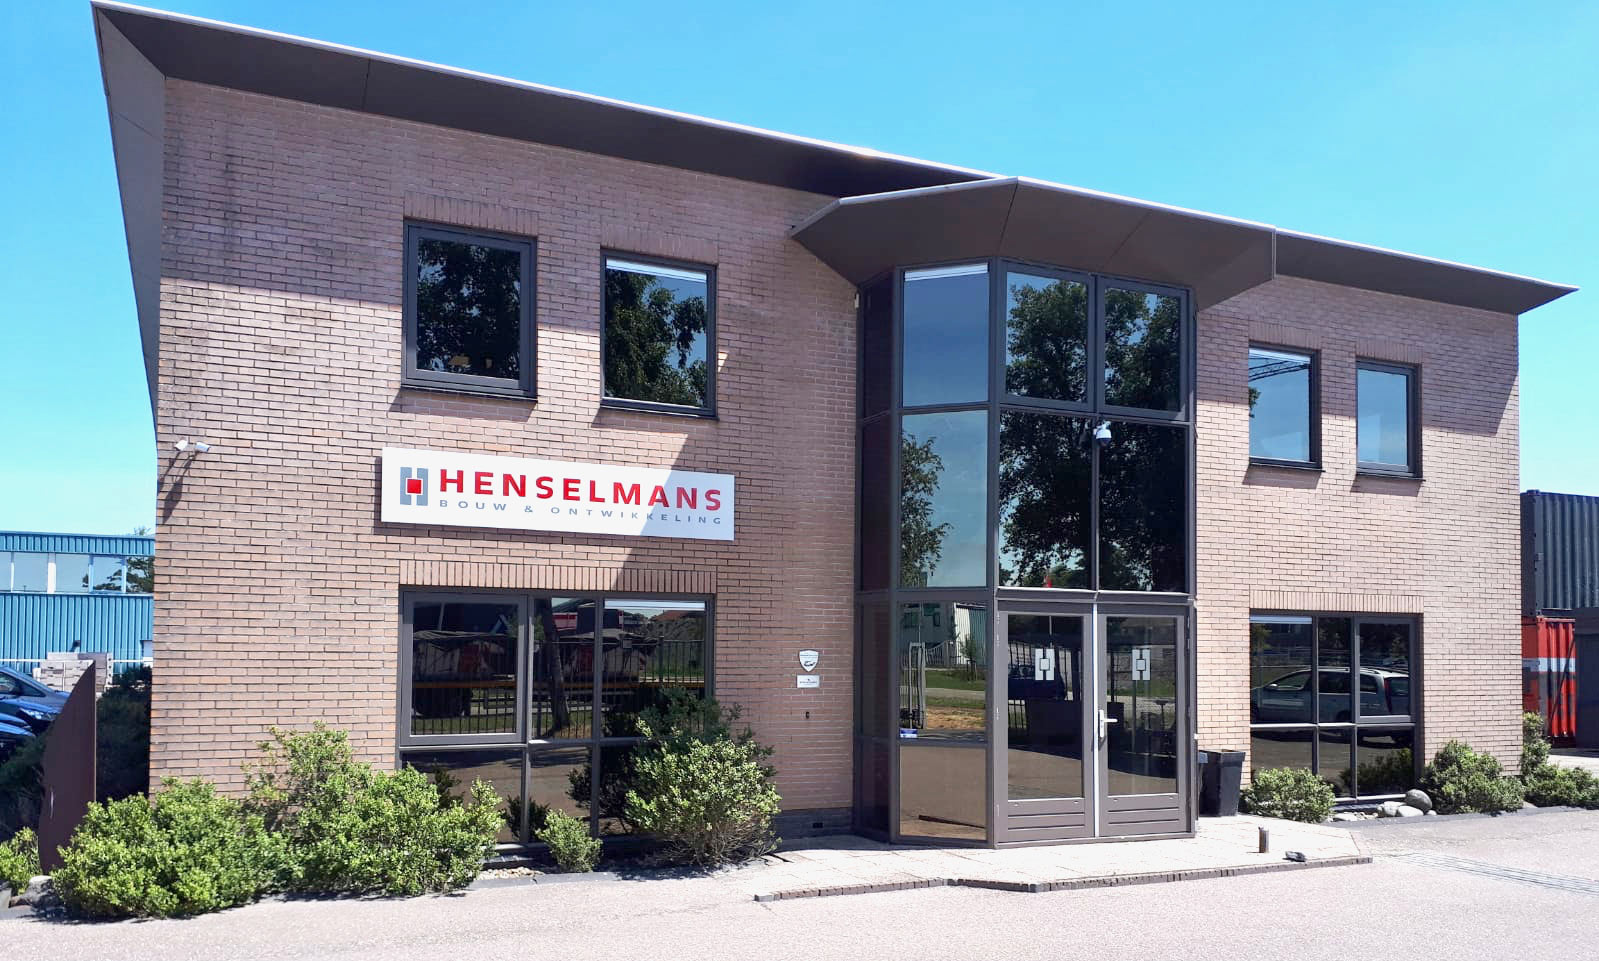 Henselmans branding